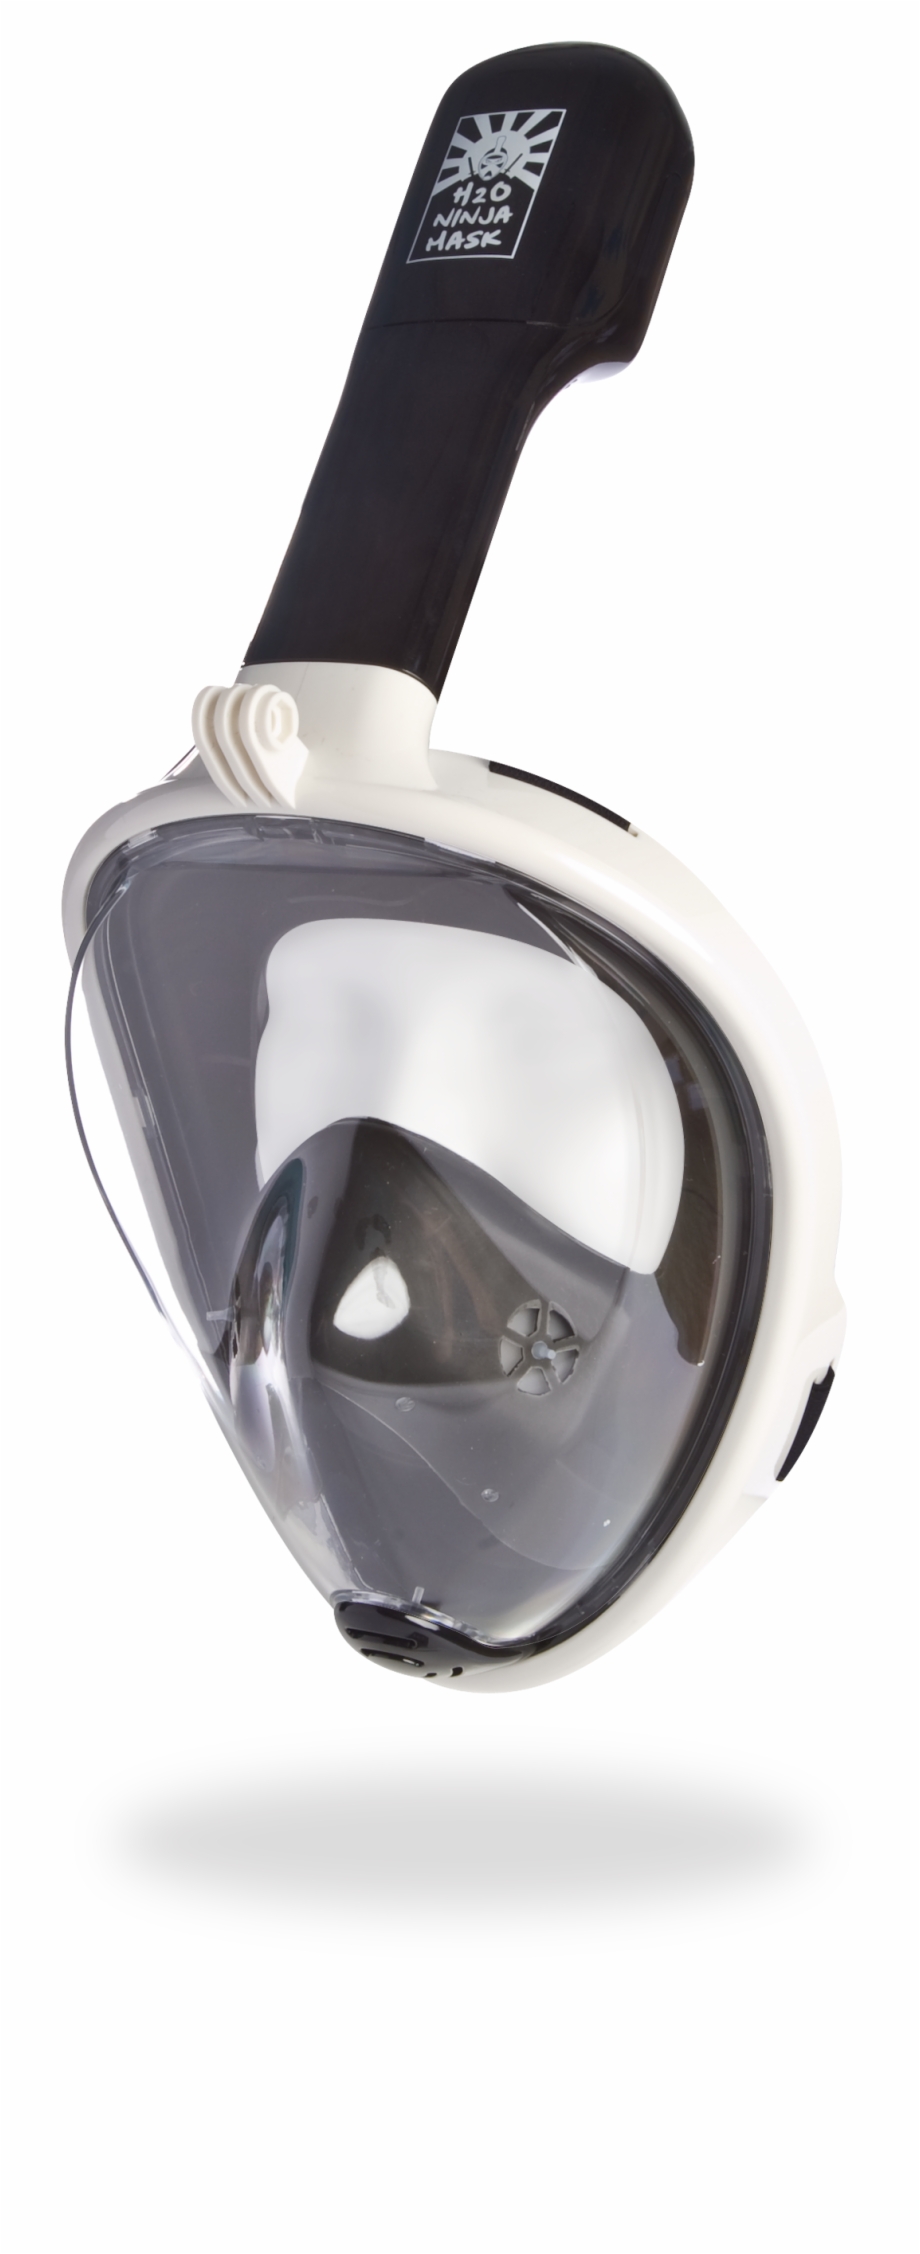 H20 Ninja Mask Full Face Snorkeling Mask Diving